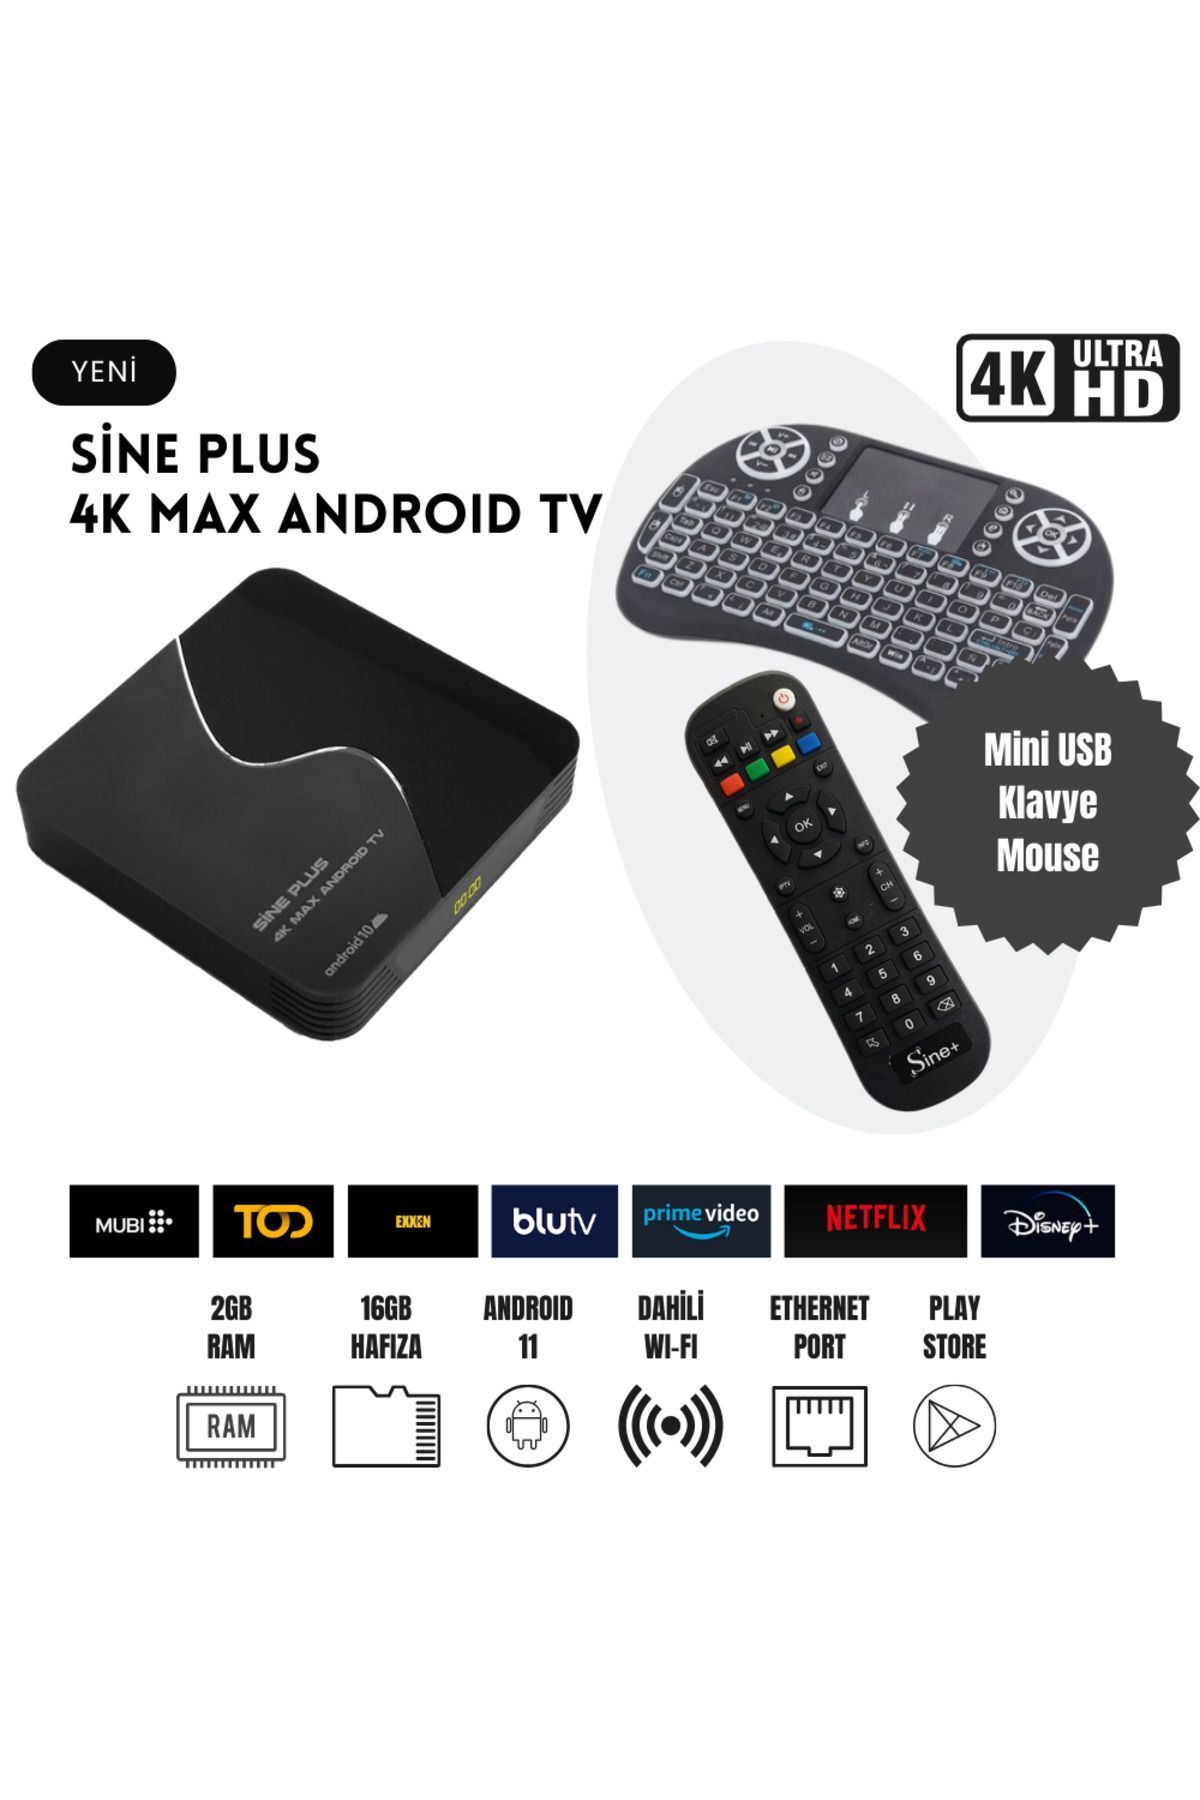 Sine Plus 4k Max 2gb Ram 16gb Hafıza Android Tv Box 4k Android Tv Box Versiyon 11 4k Uhd Medya Player